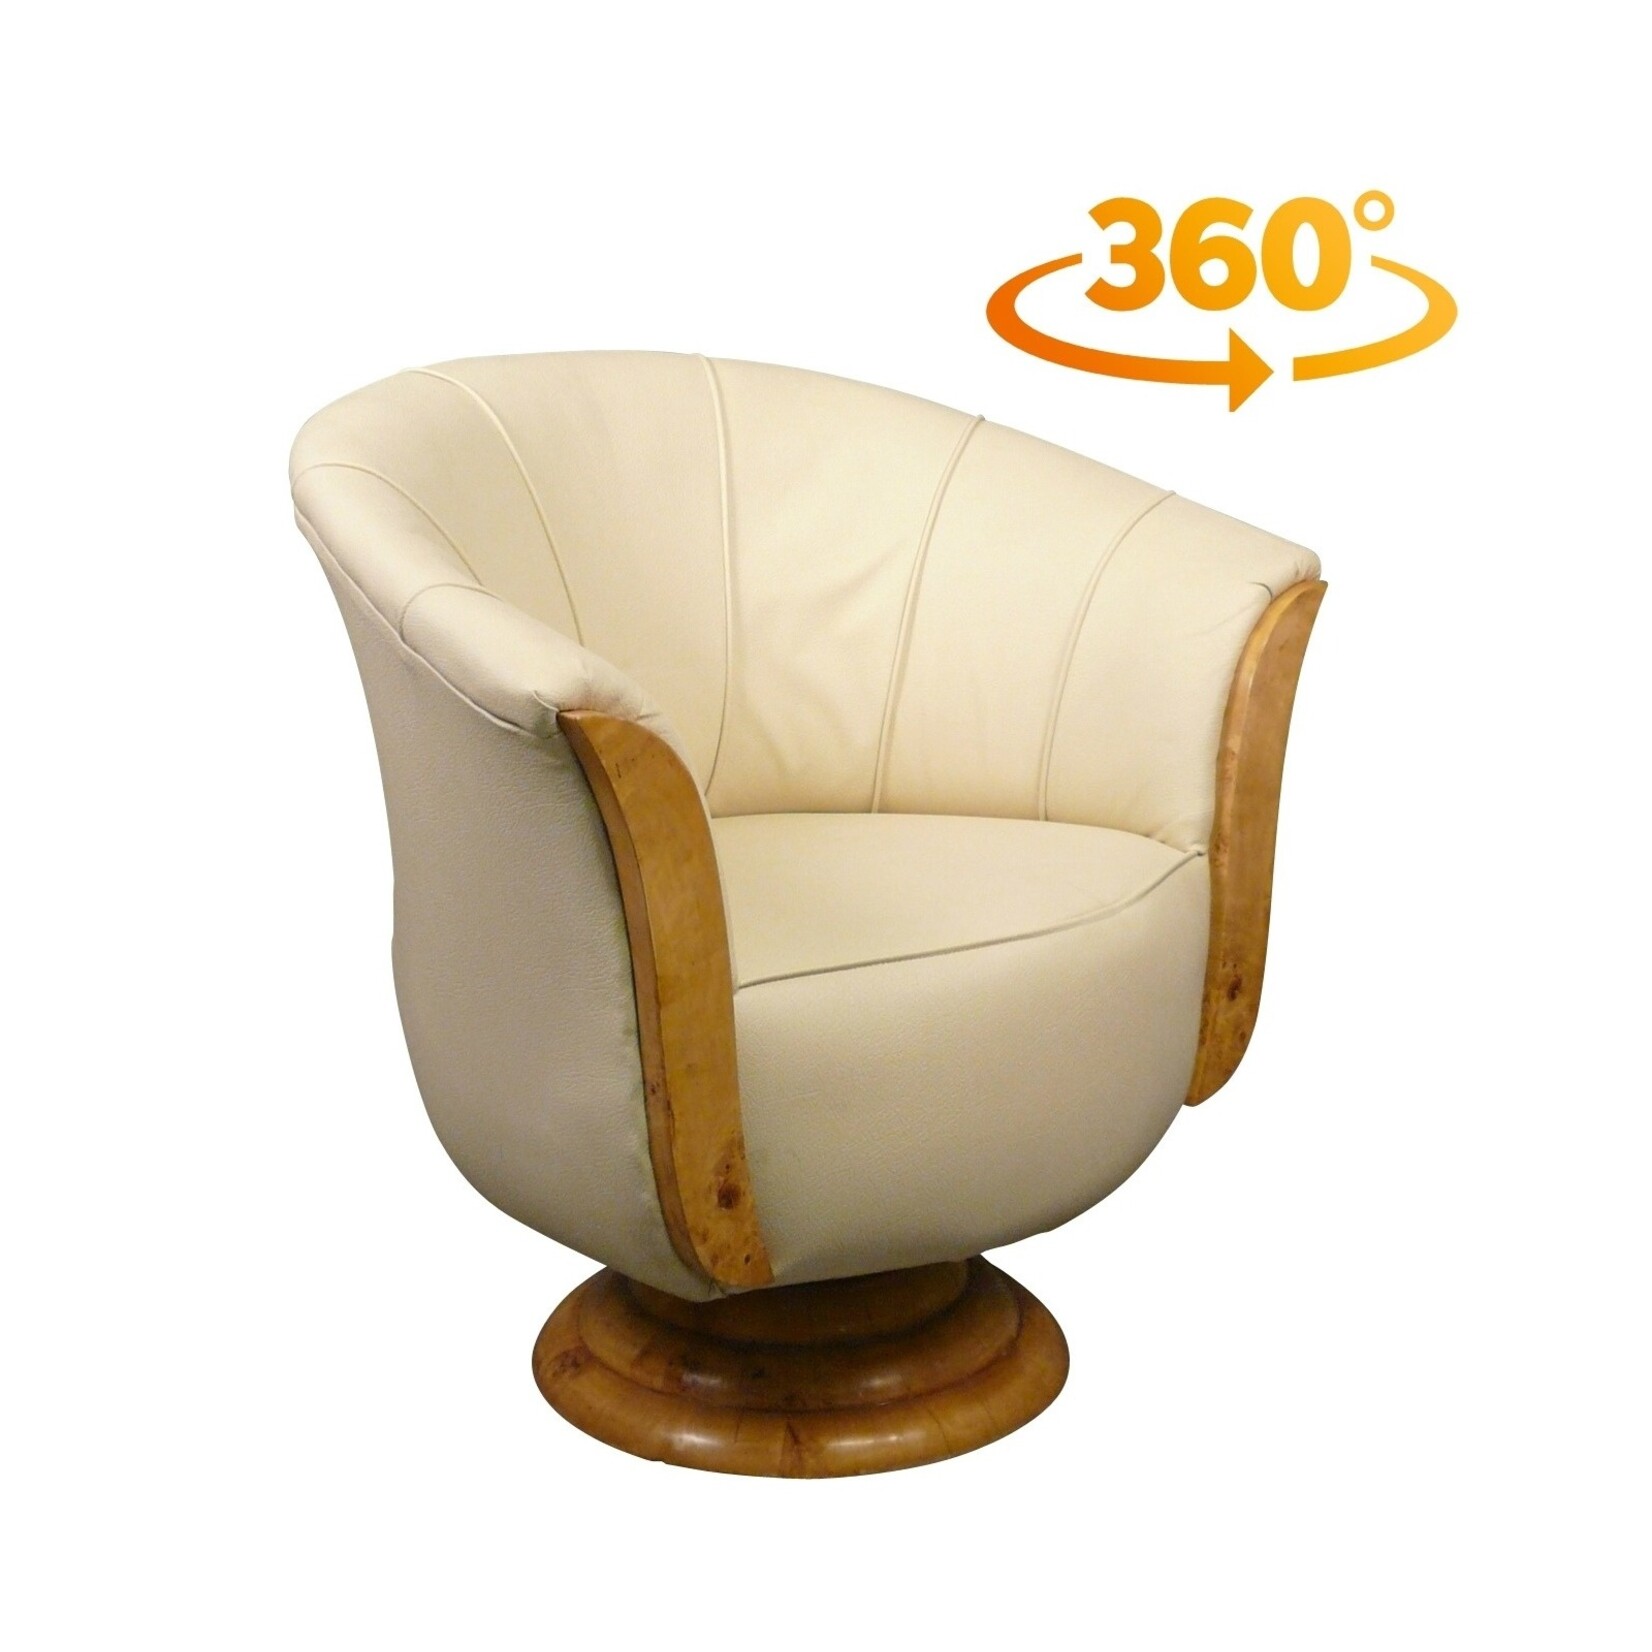 Art Deco swivel chair